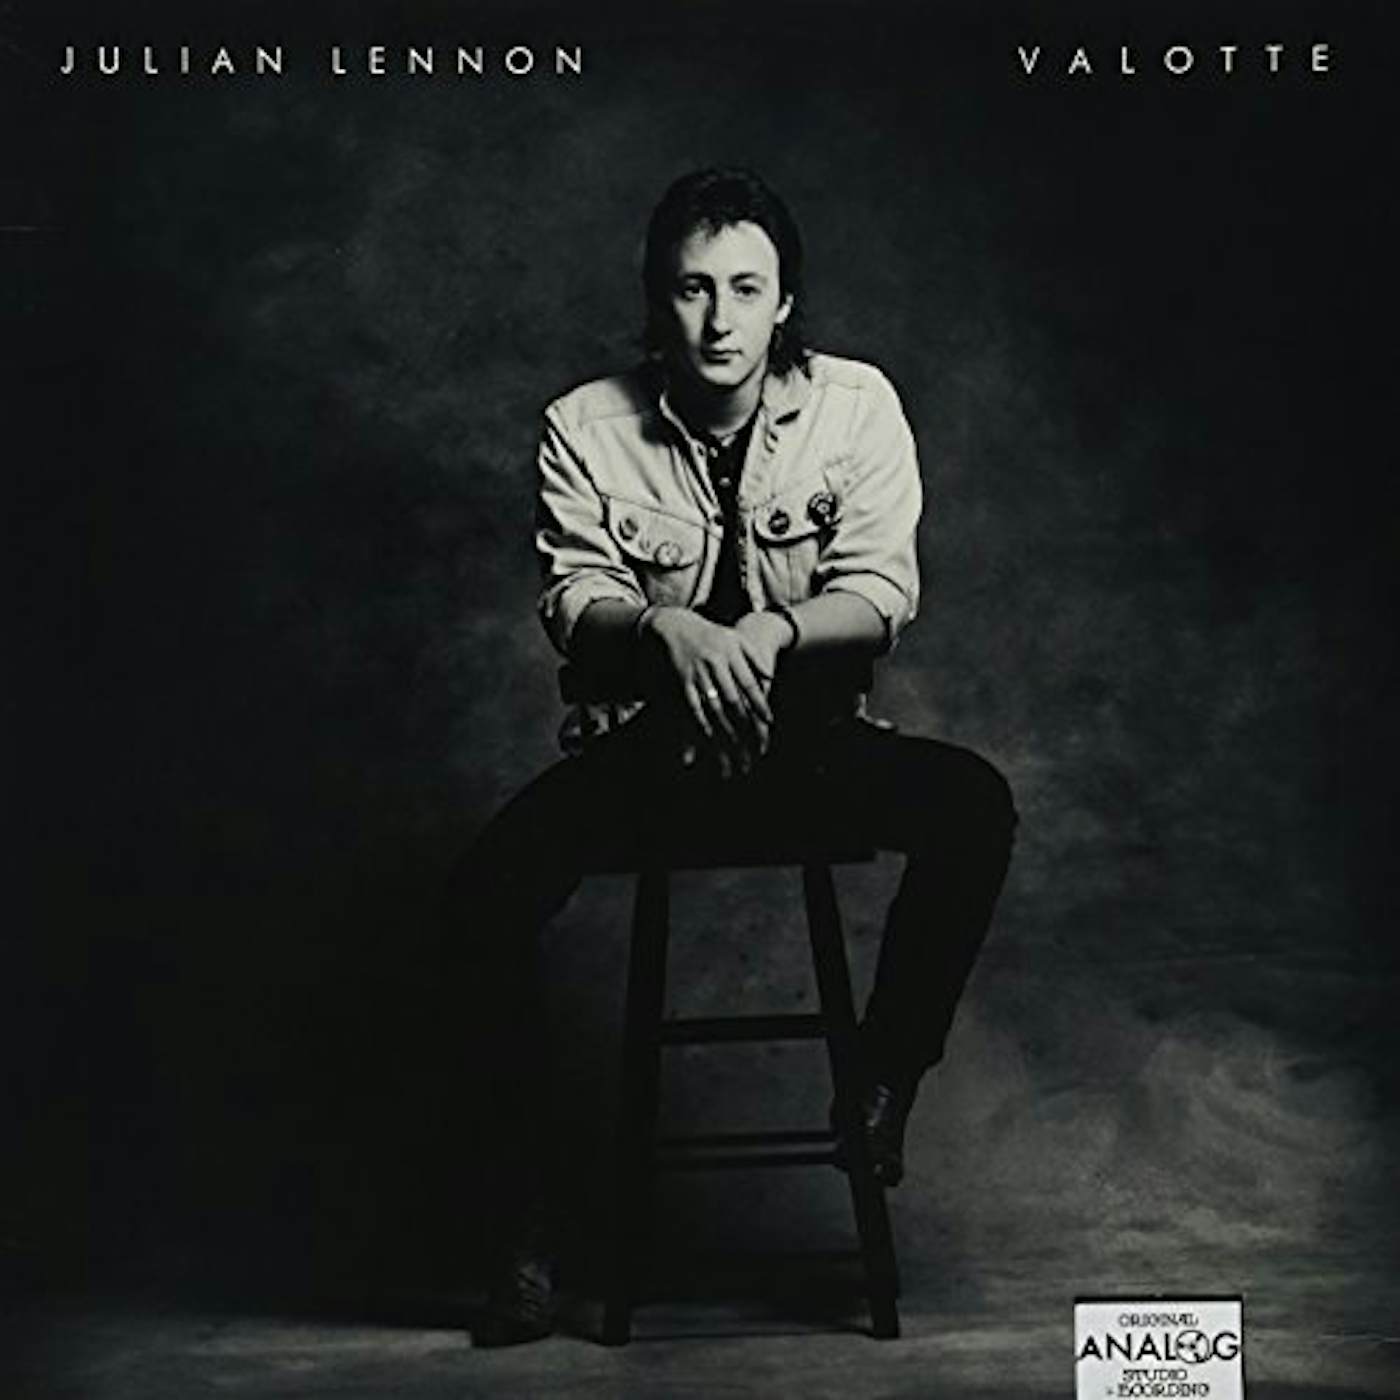 Julian Lennon VALOTTE Vinyl Record